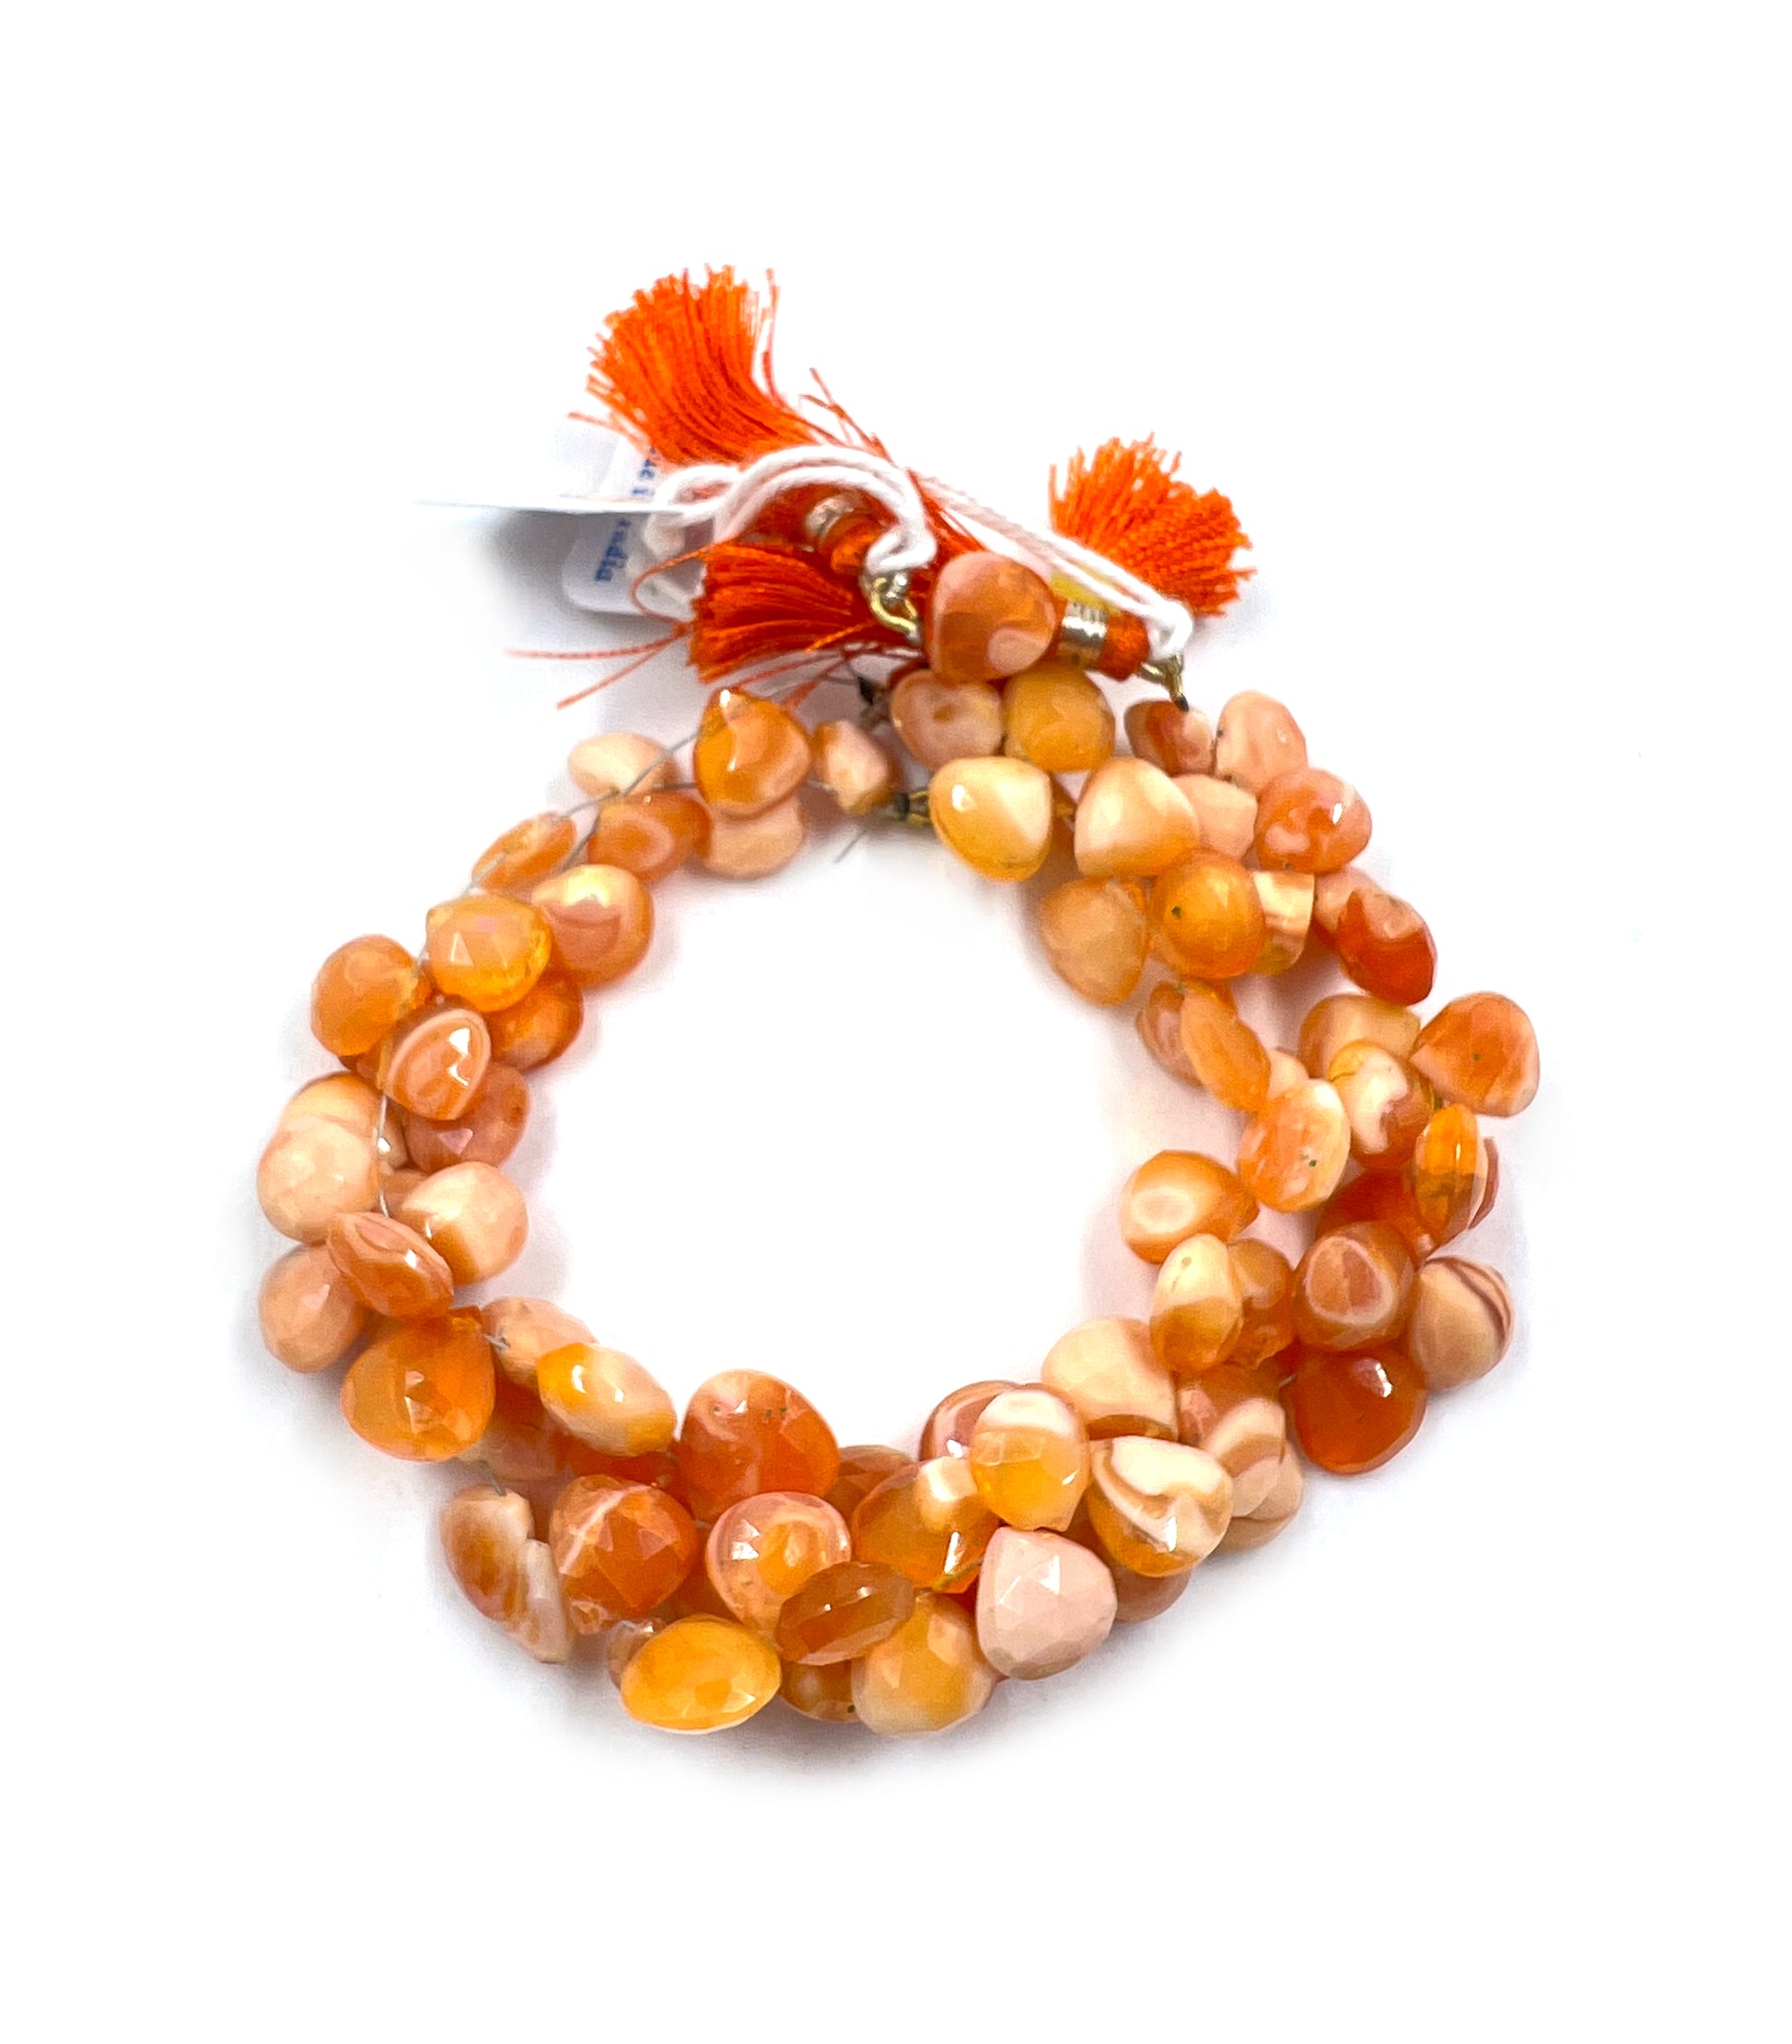 Fire Opal Heart Faceted Gemstone Beads